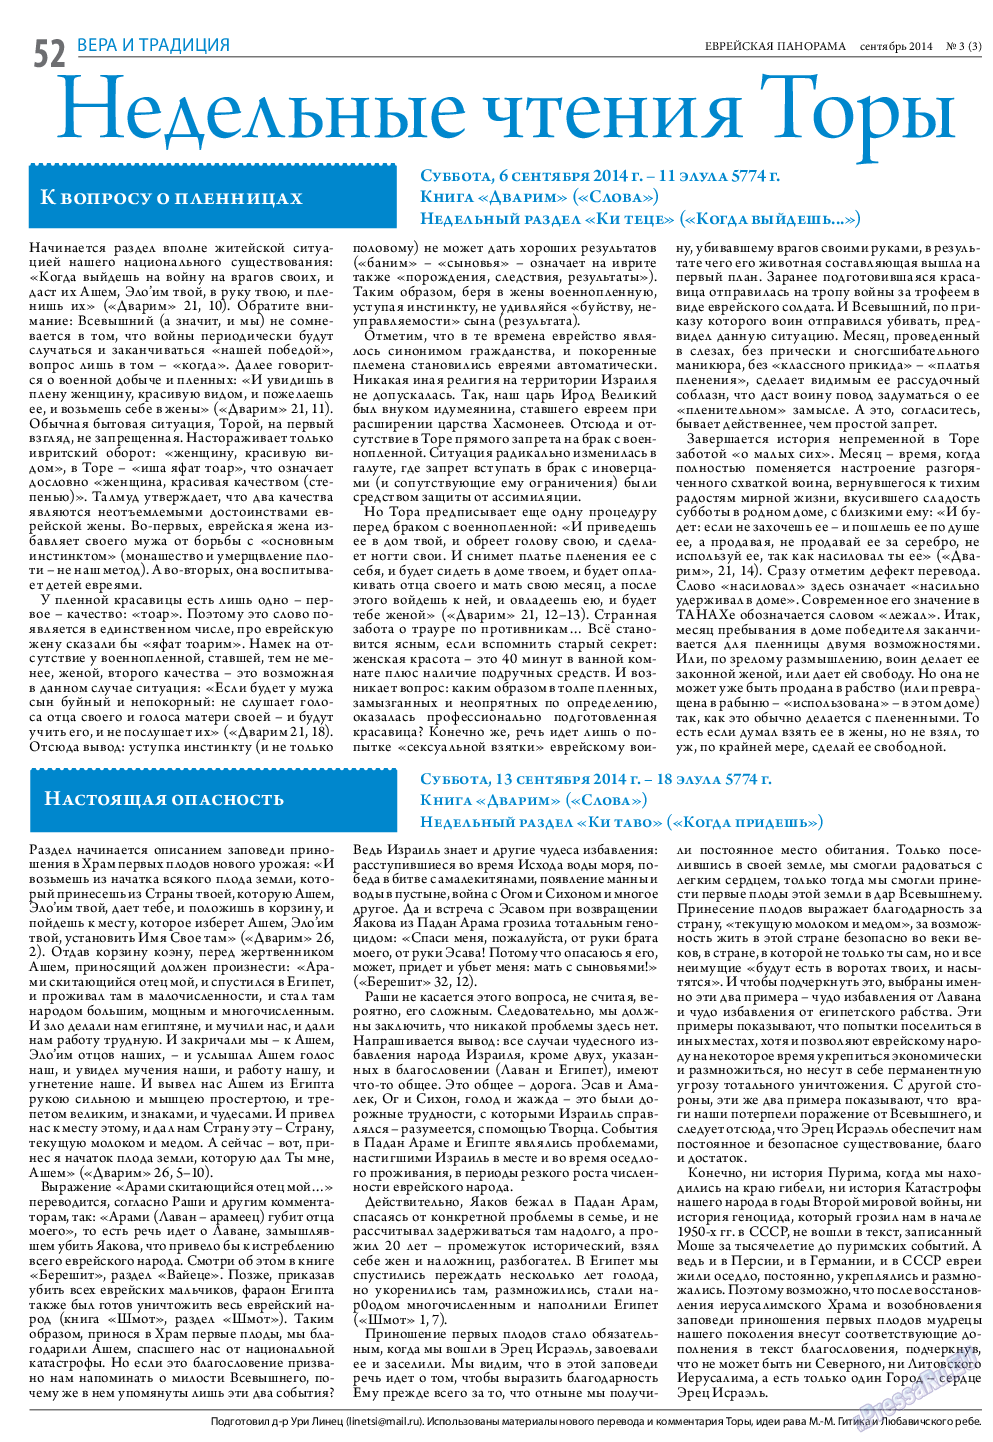 Еврейская панорама, газета. 2014 №3 стр.52